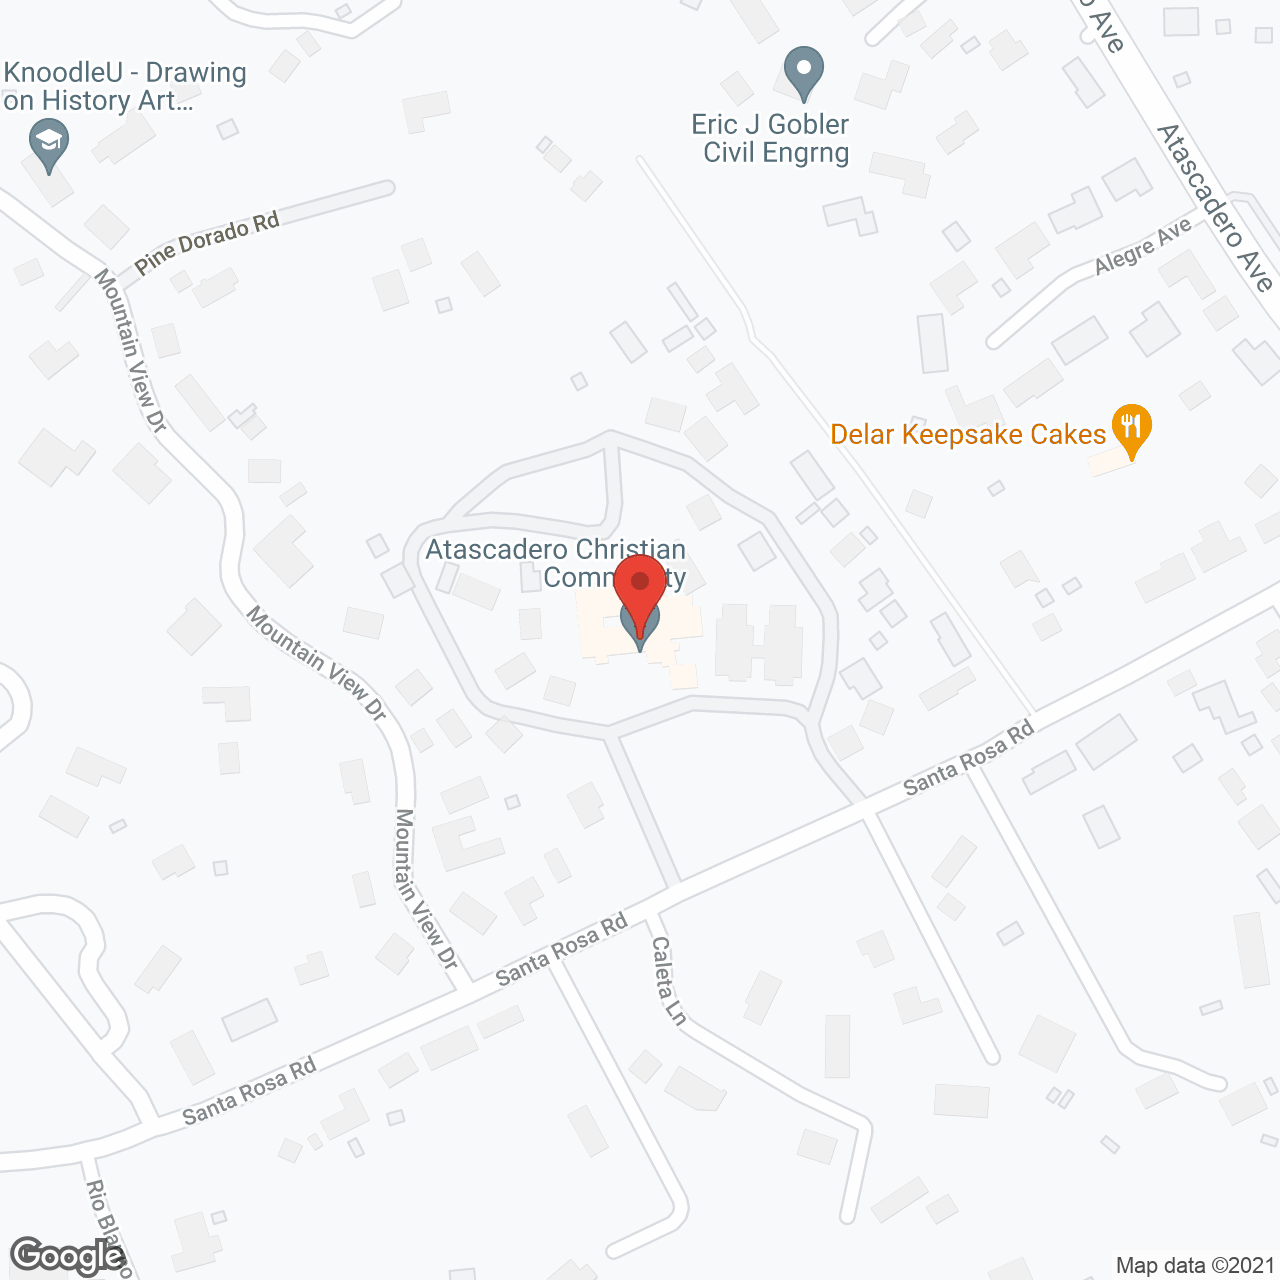 Atascadero Christian Home in google map